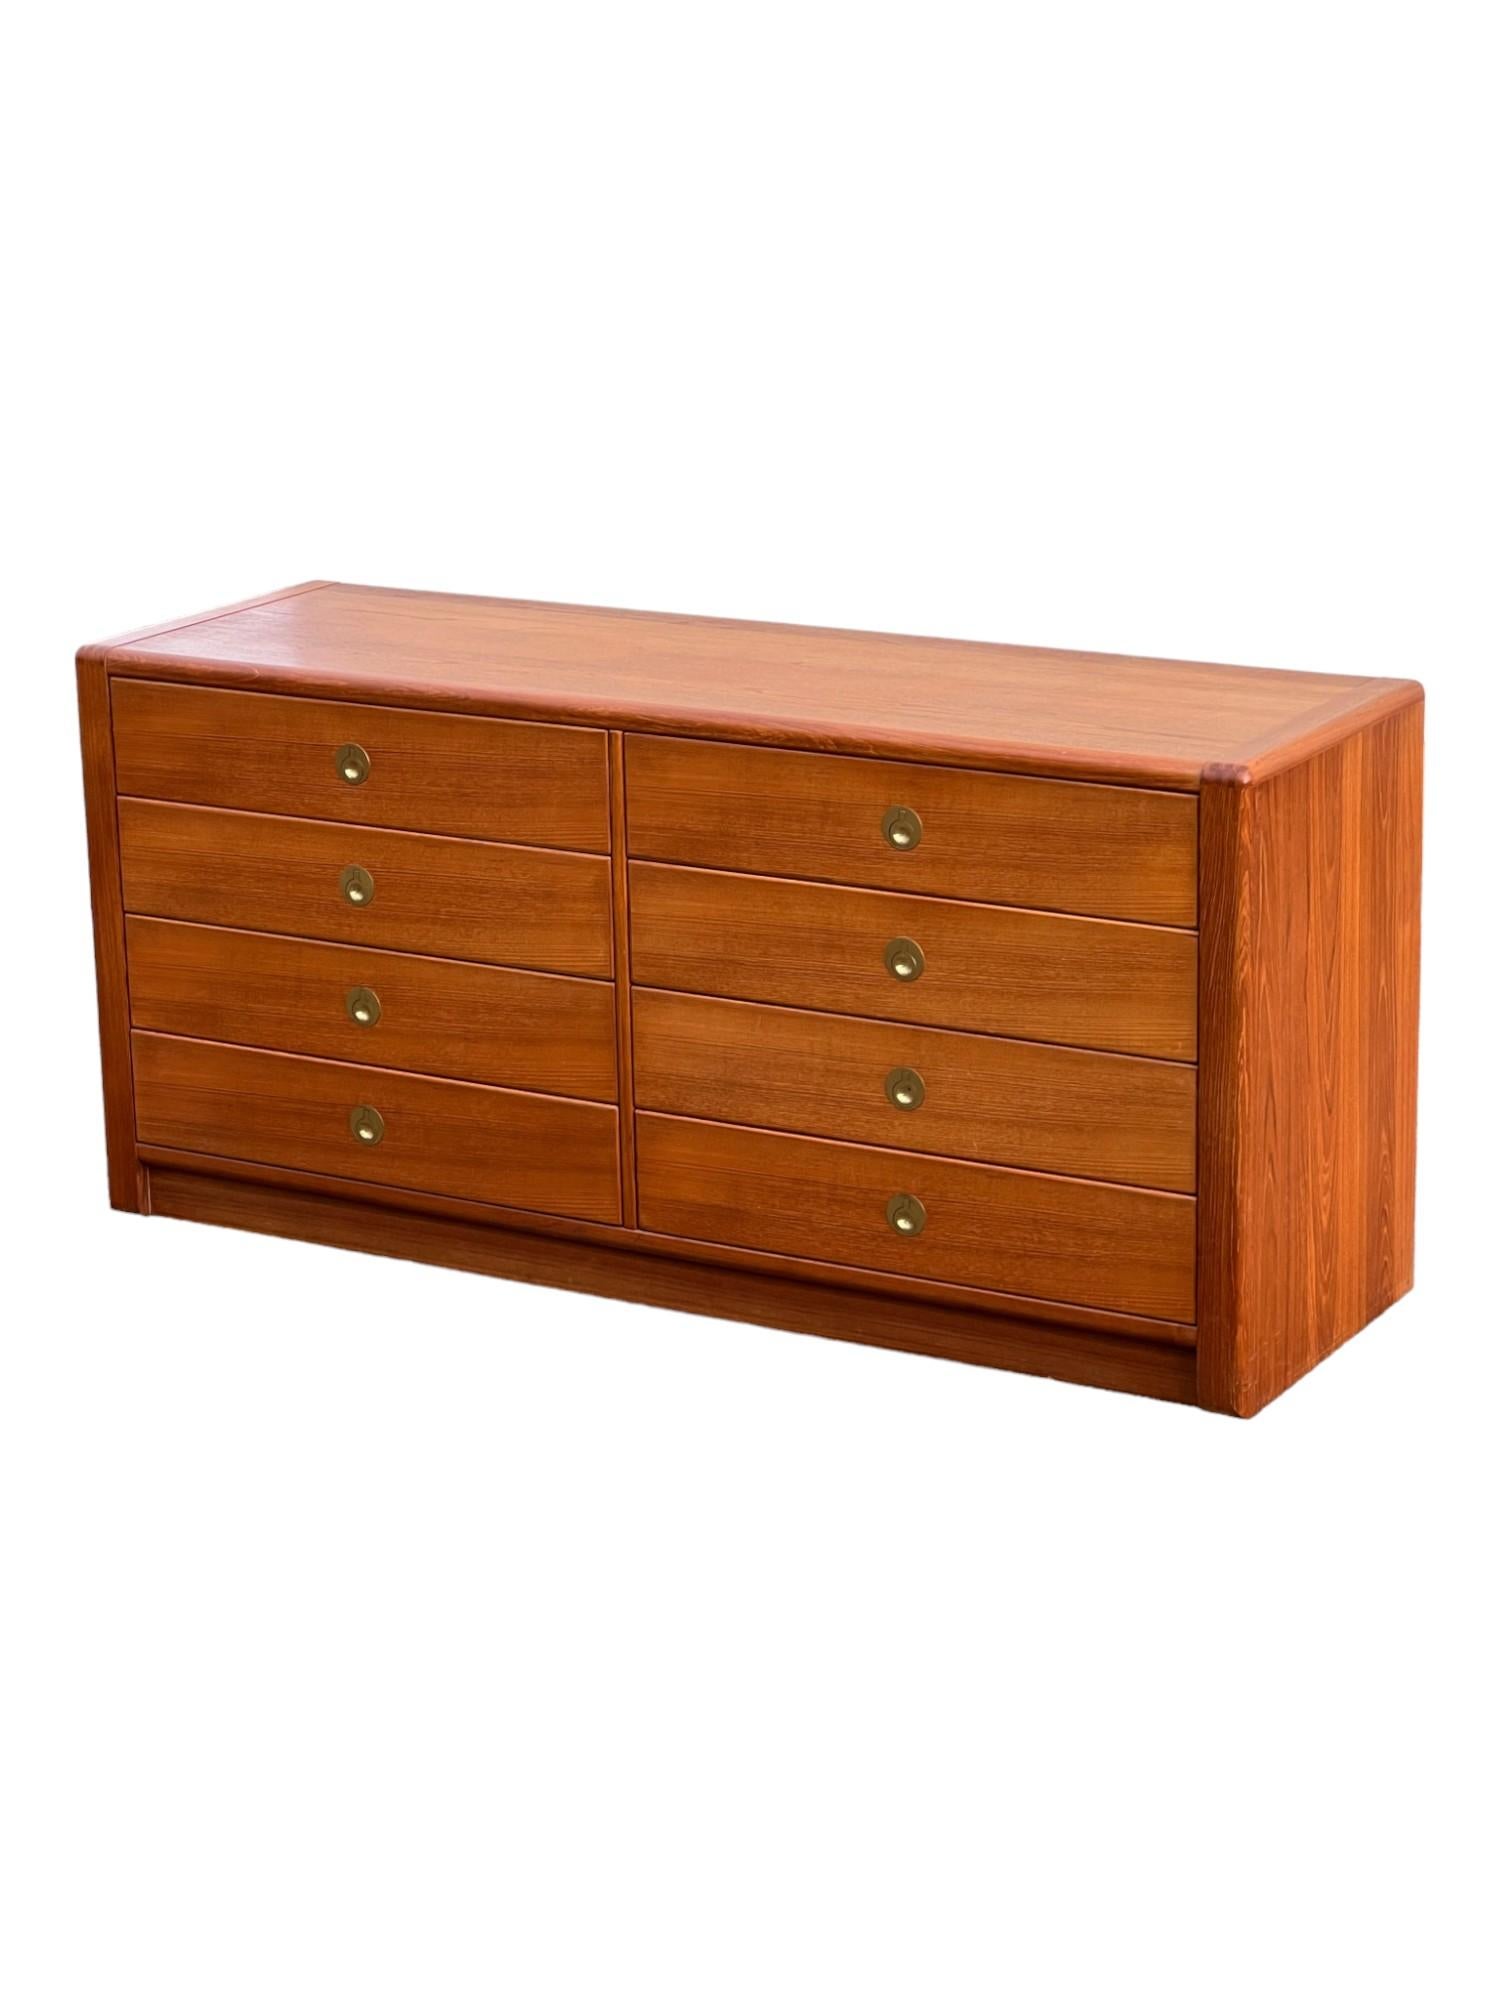 Mid-Century Teak Lowboy Dresser by D-Scan in pristine condition. 

Dimensions: 

width - 62.5”

depth - 20”

height - 29.5”